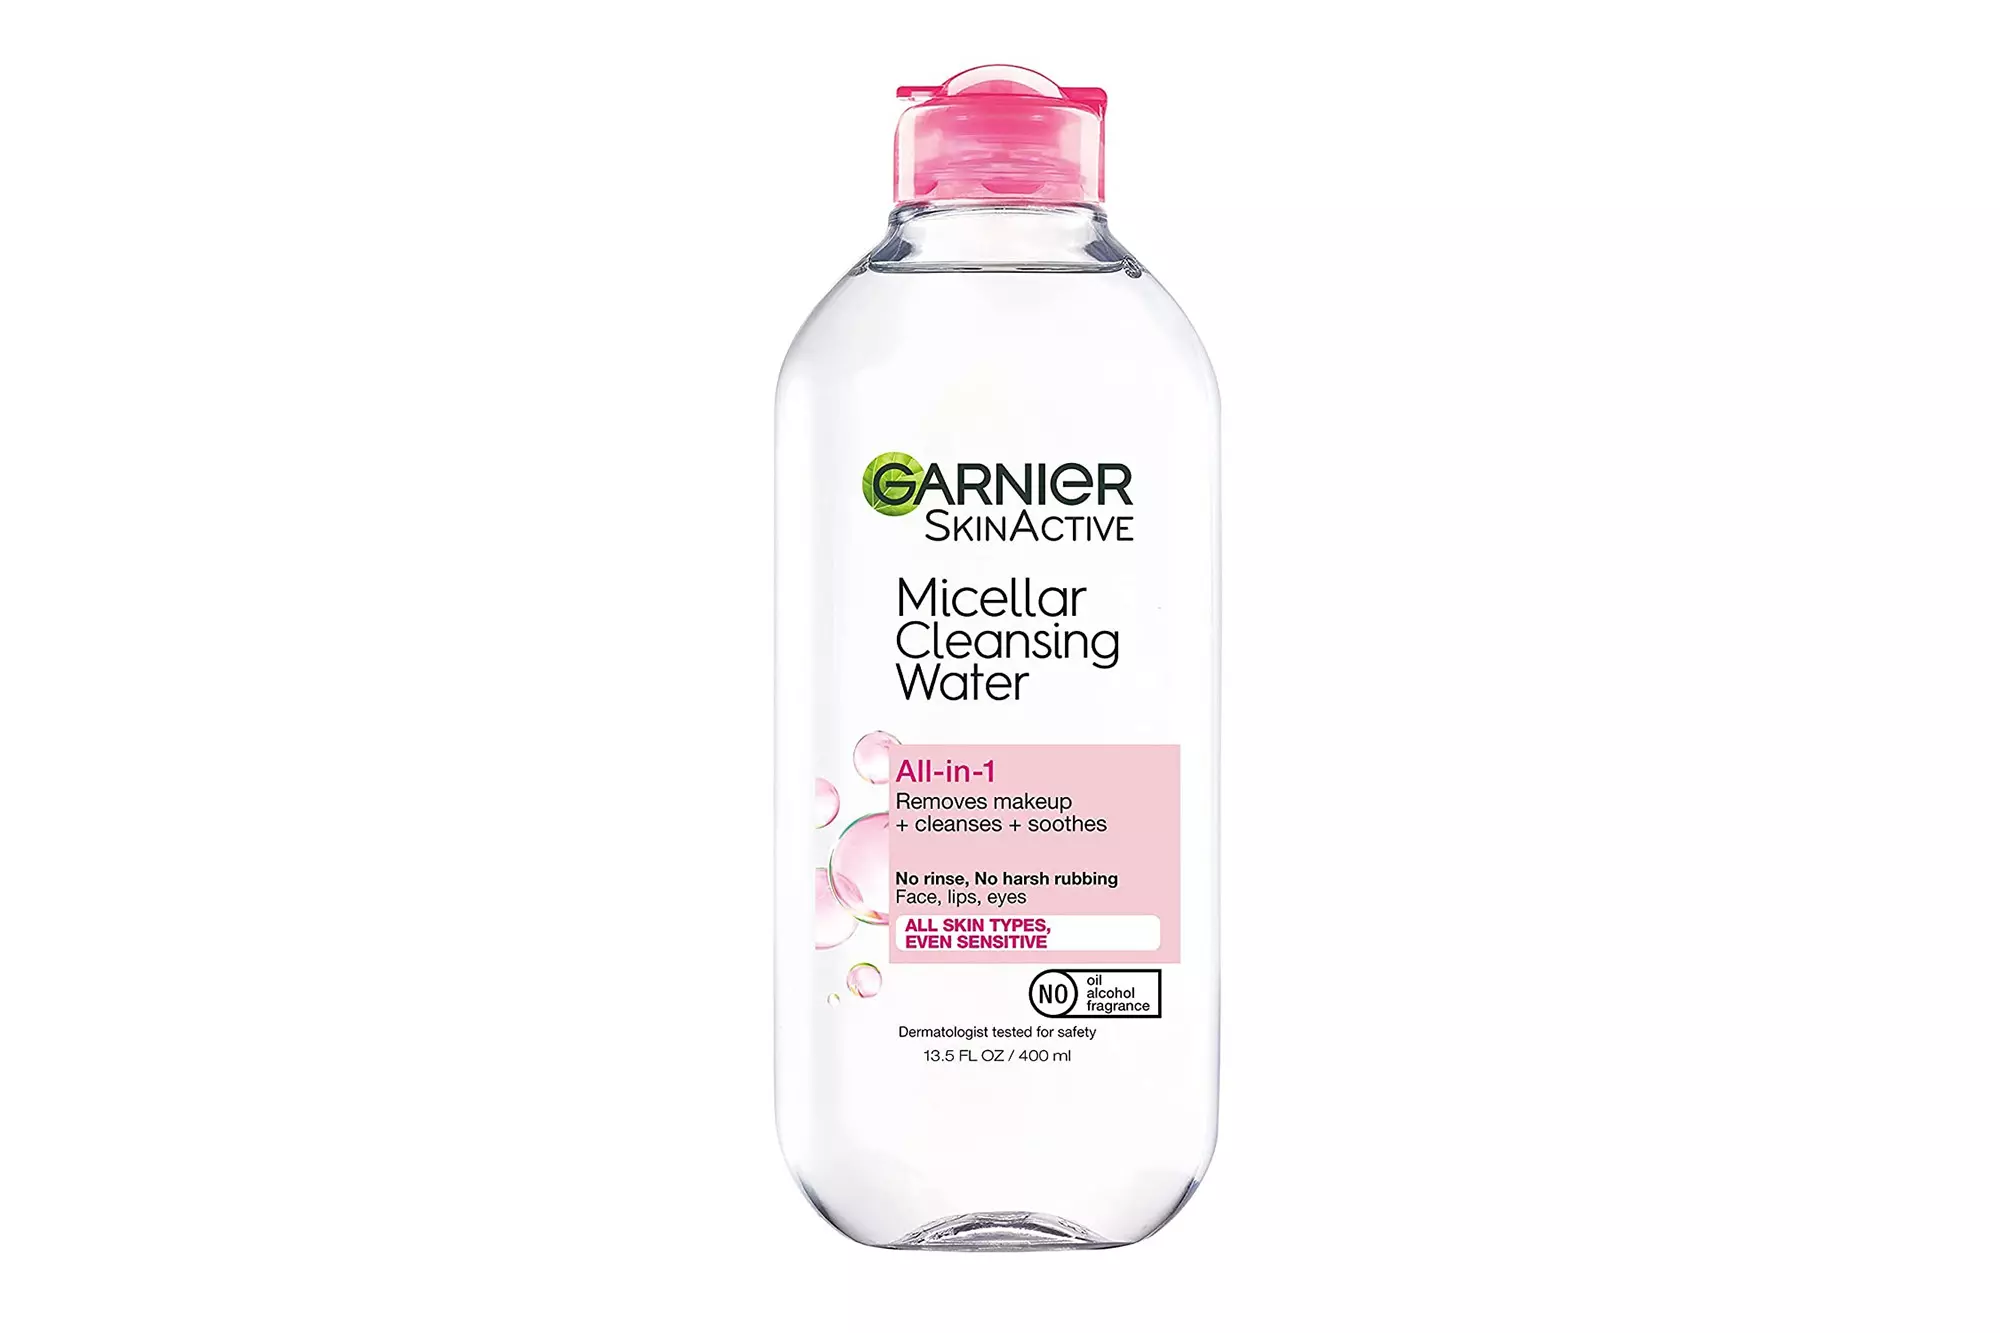 Garnier SkinActive Micellar Cleansing Water All-in-1